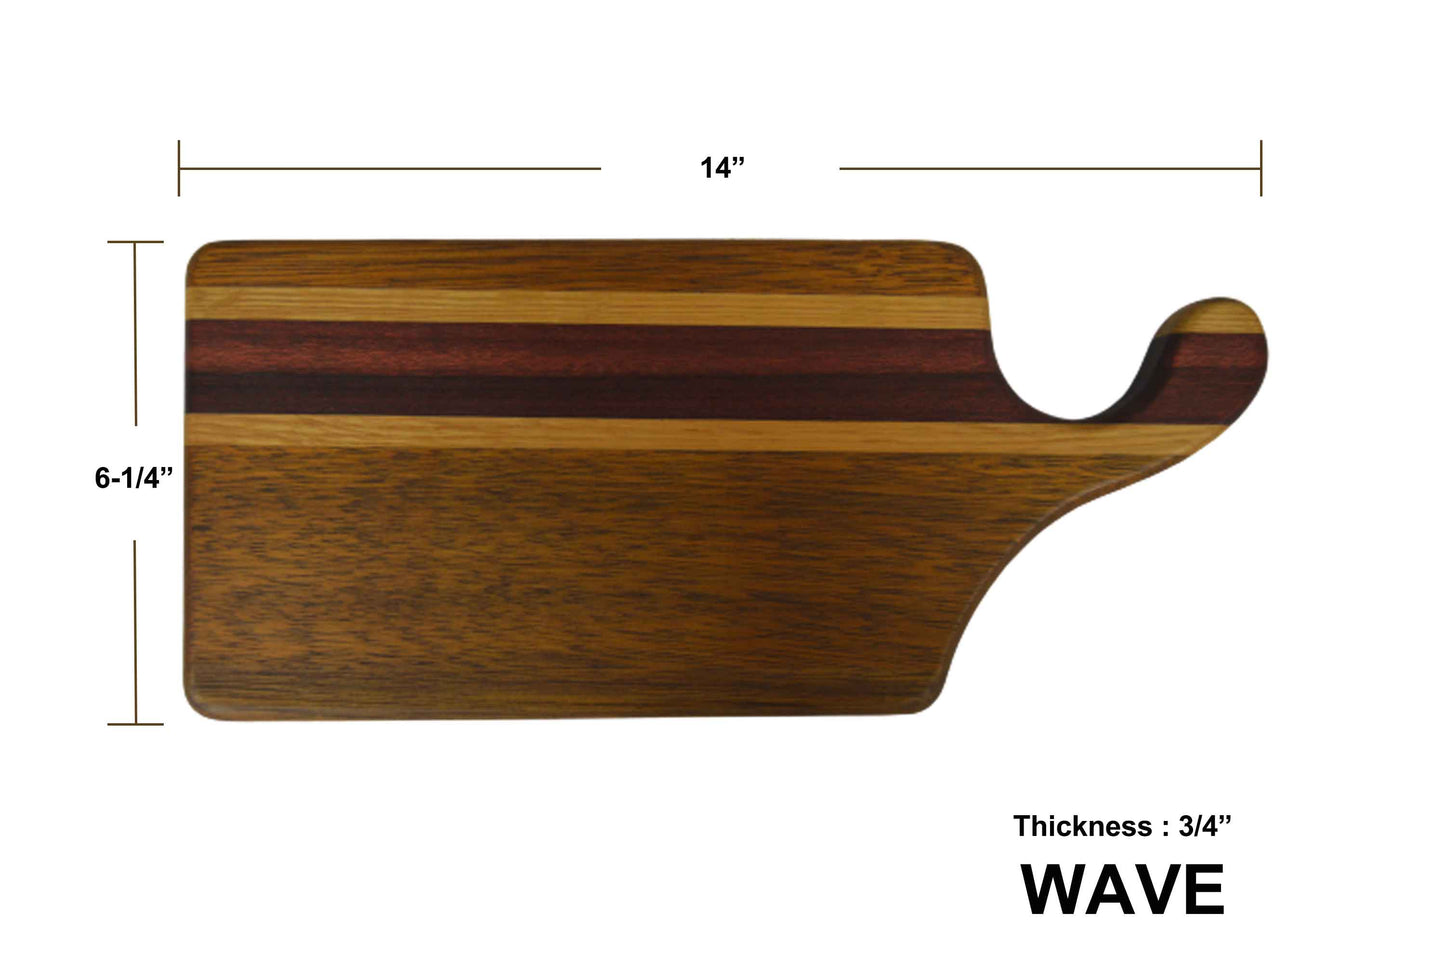 Charcuterie Wood Board - Wave